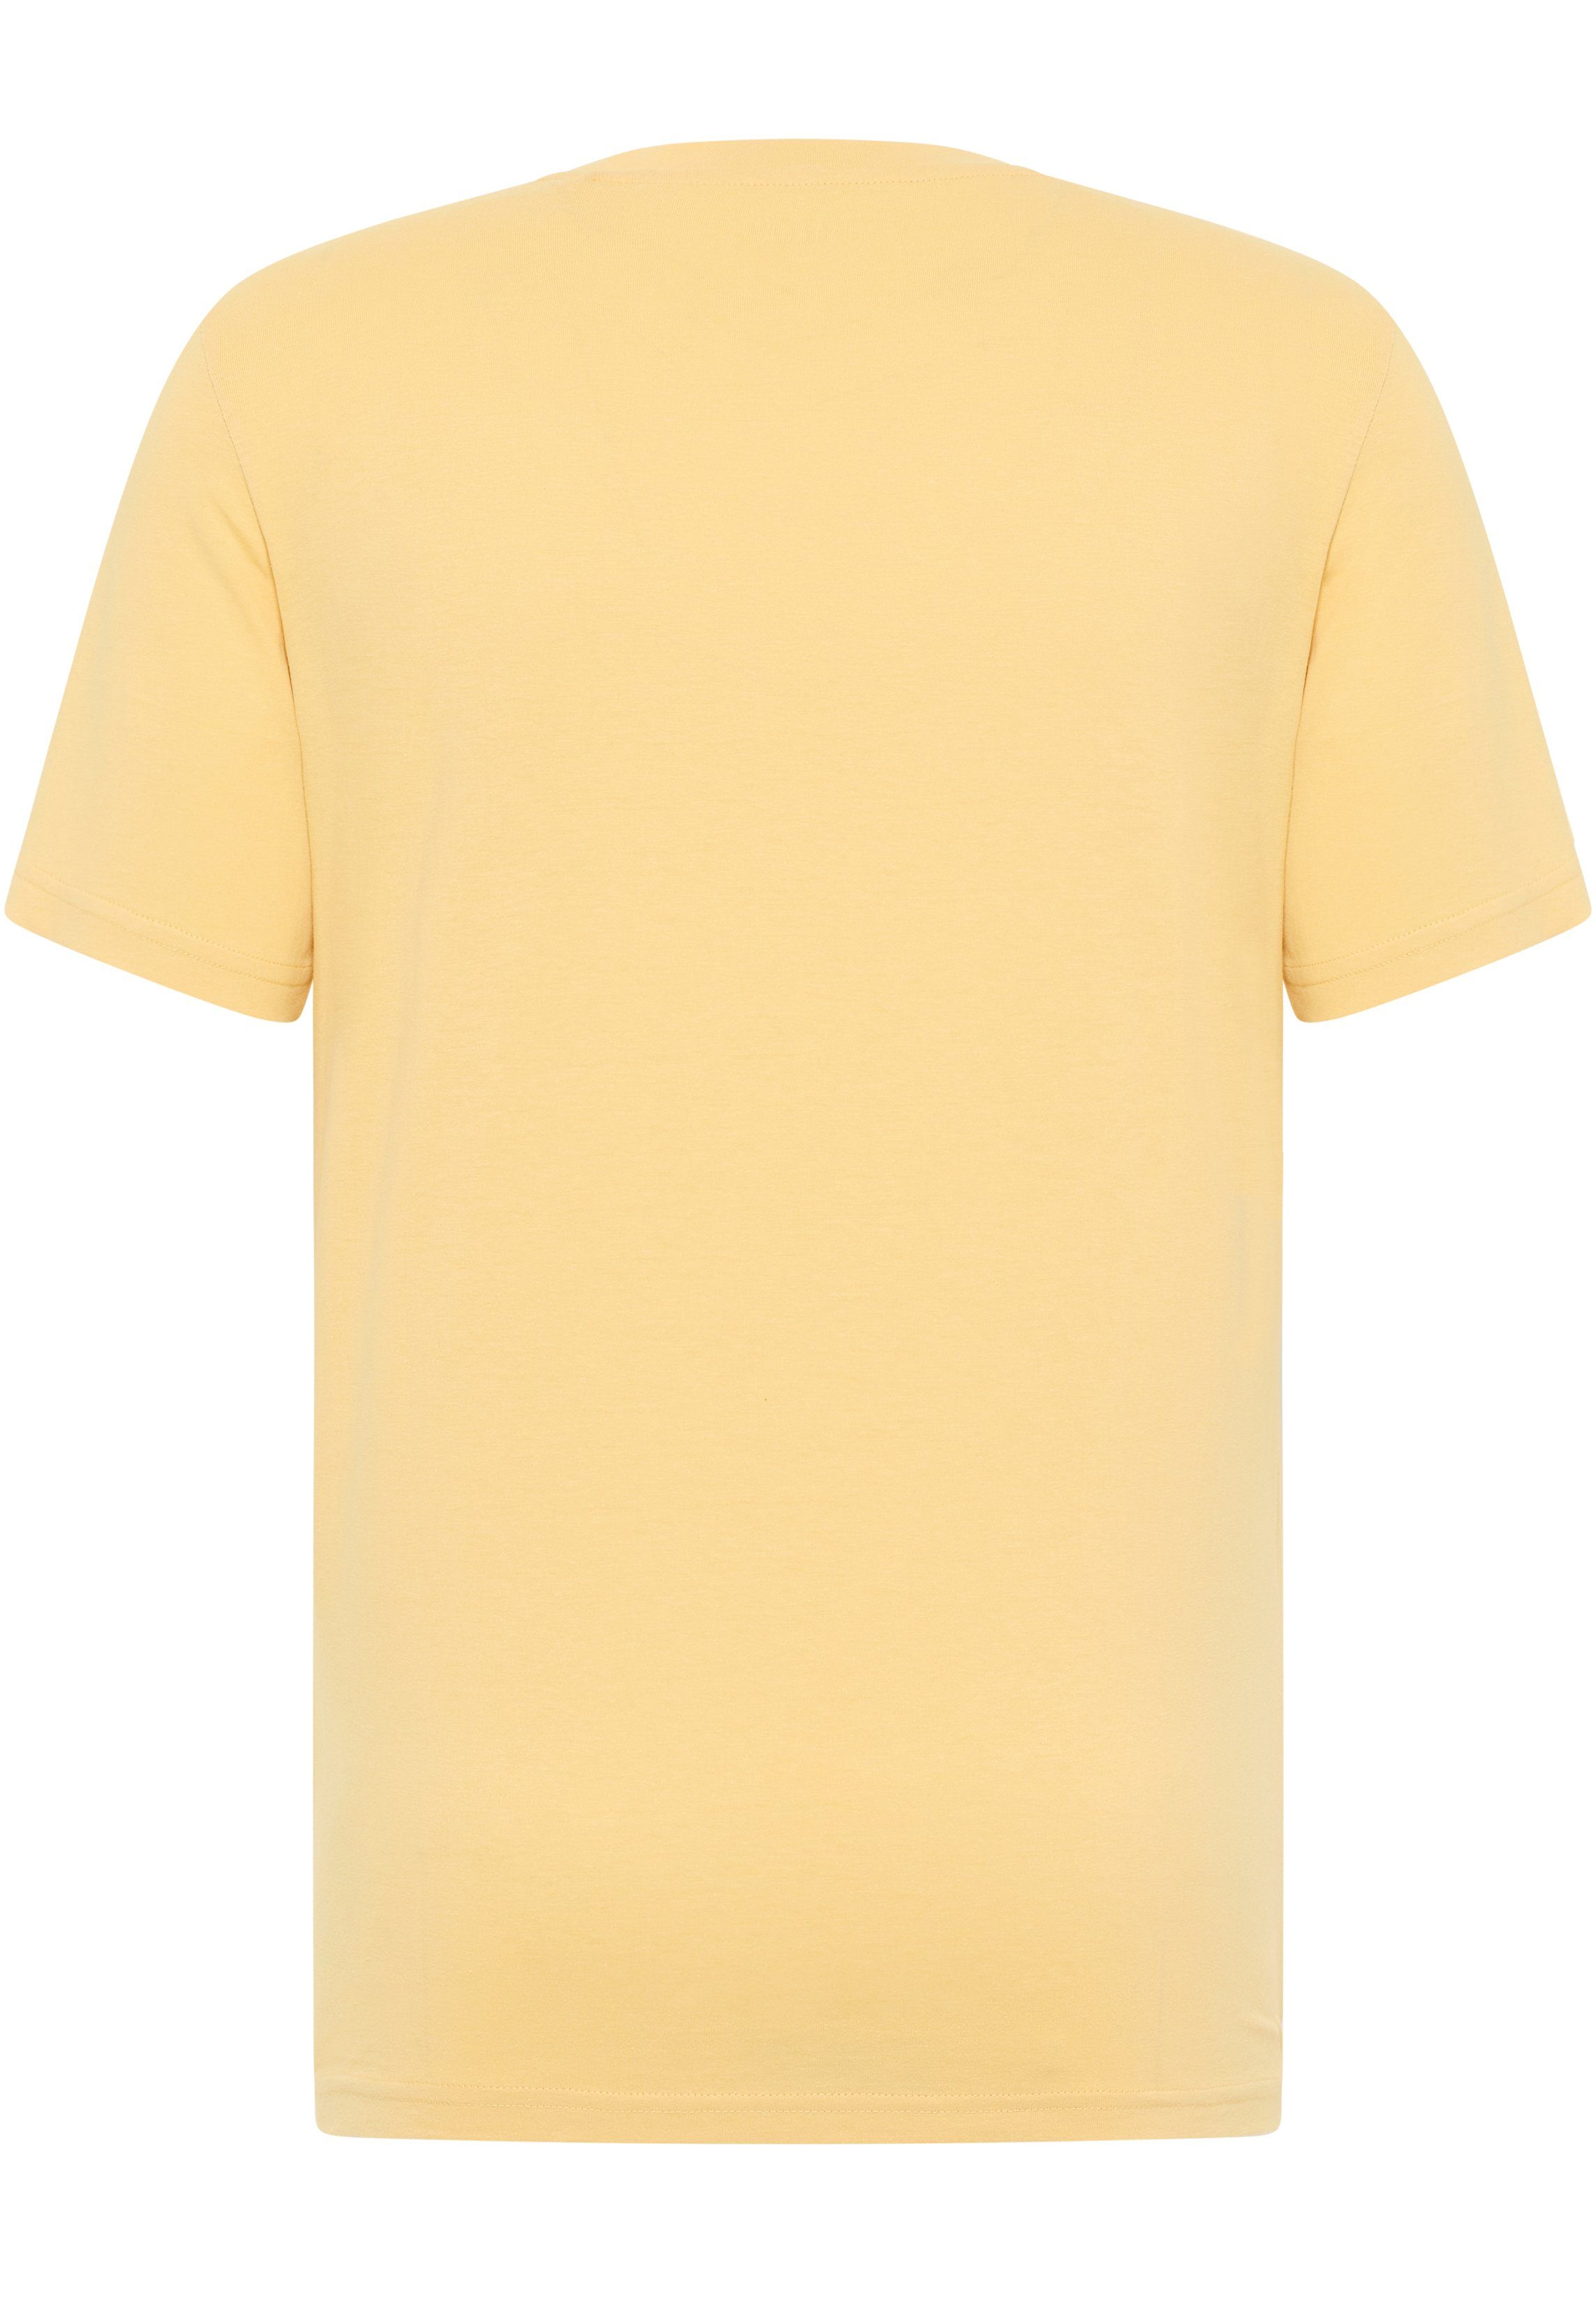 Kurzarmshirt Print-Shirt gelb MUSTANG Mustang